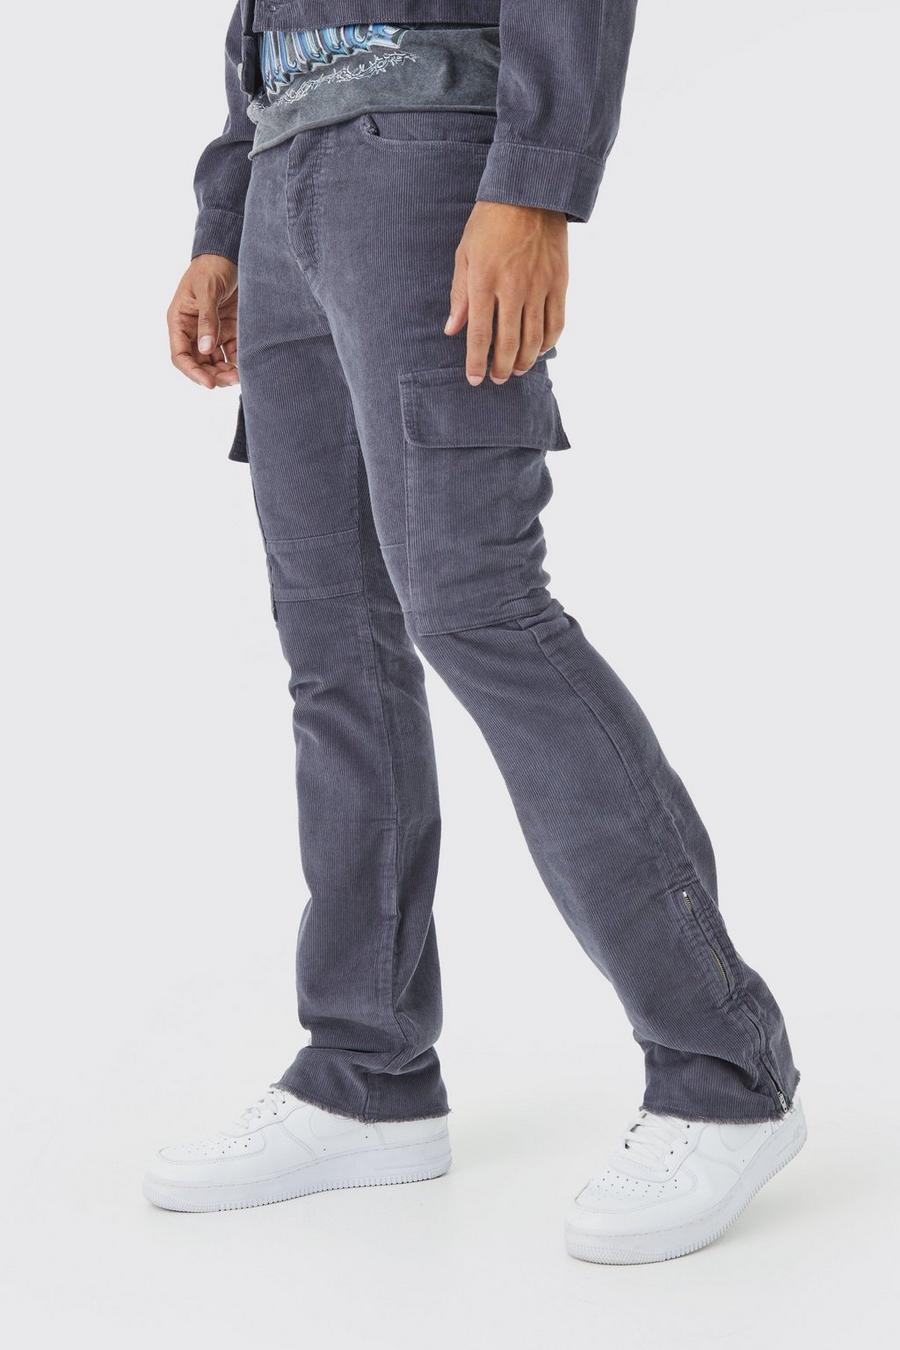 Pantalon cargo zippé, Charcoal gris